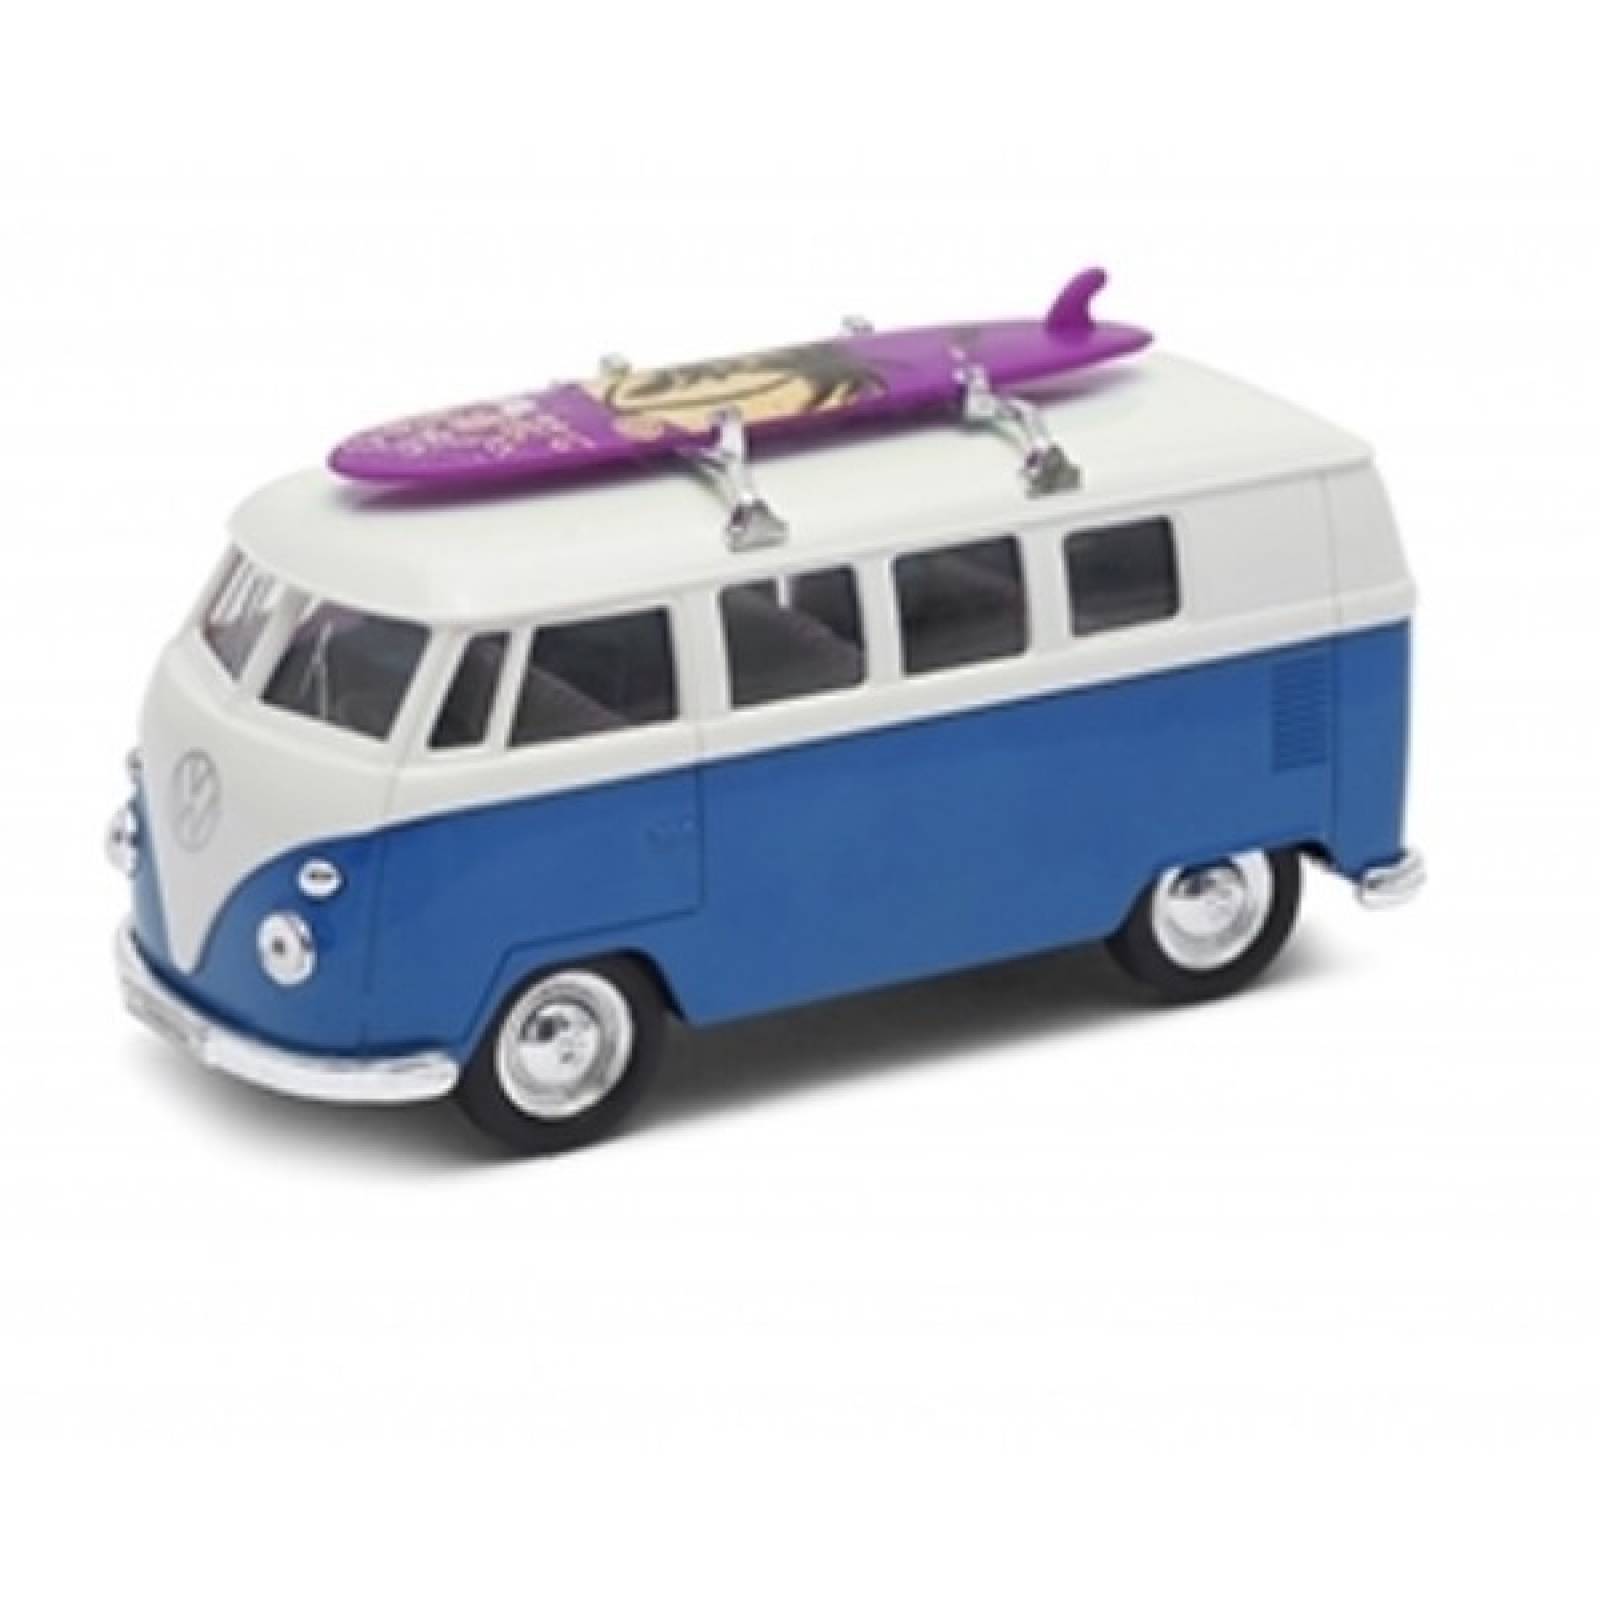 Diecast VW Camper Van with Surfboard 3+